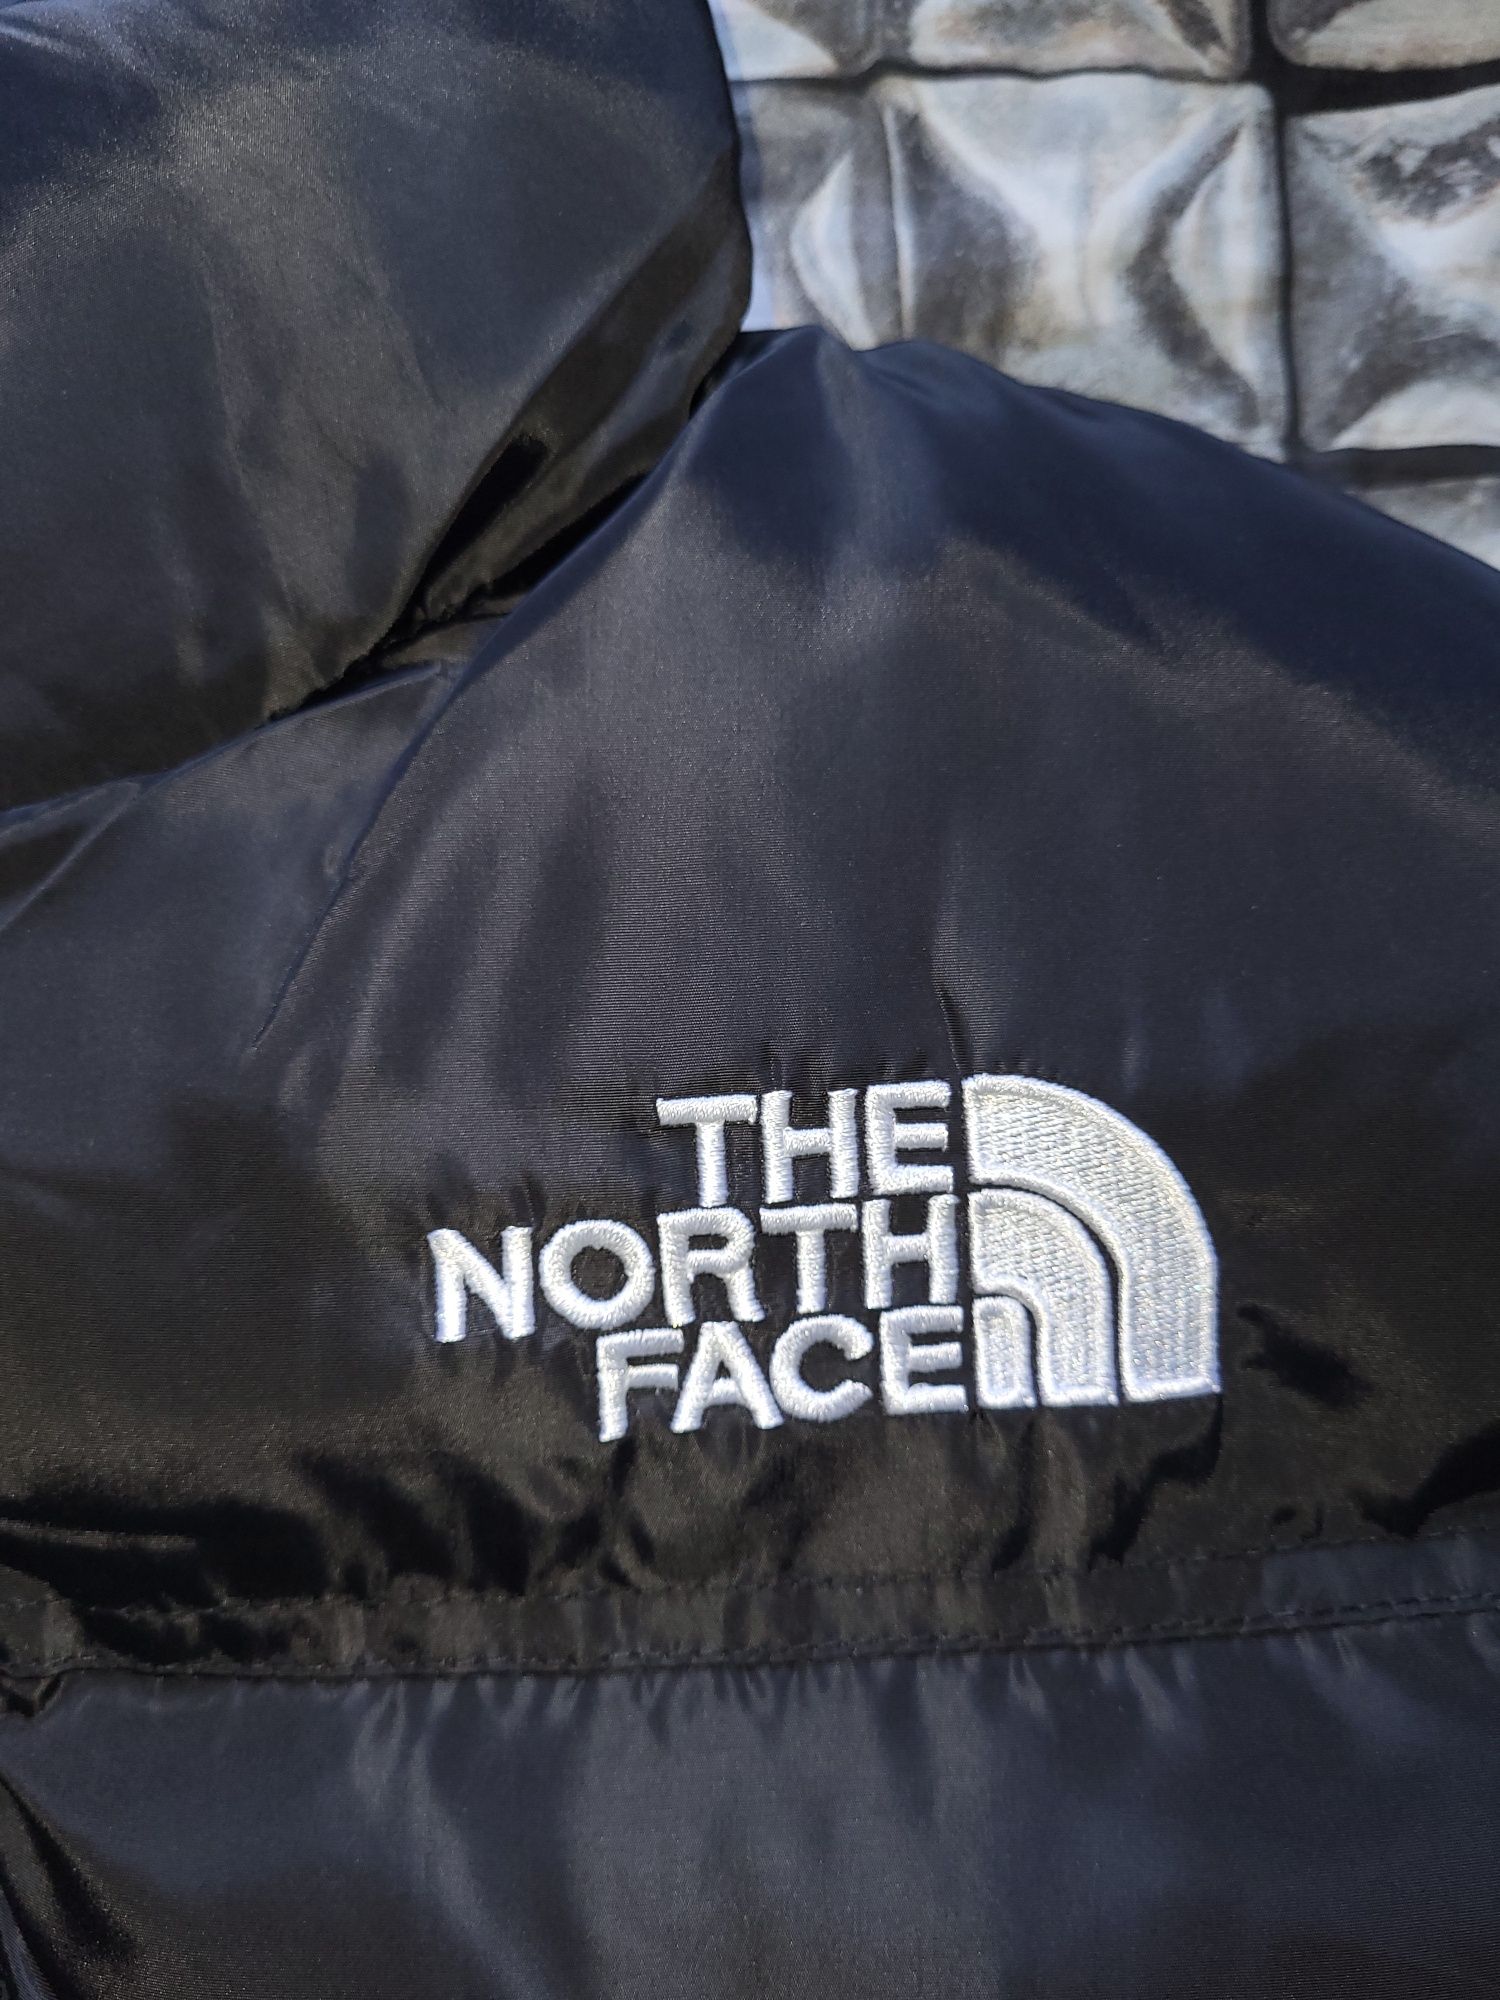 VAND URGENT!!! Geaca The North Face neagra